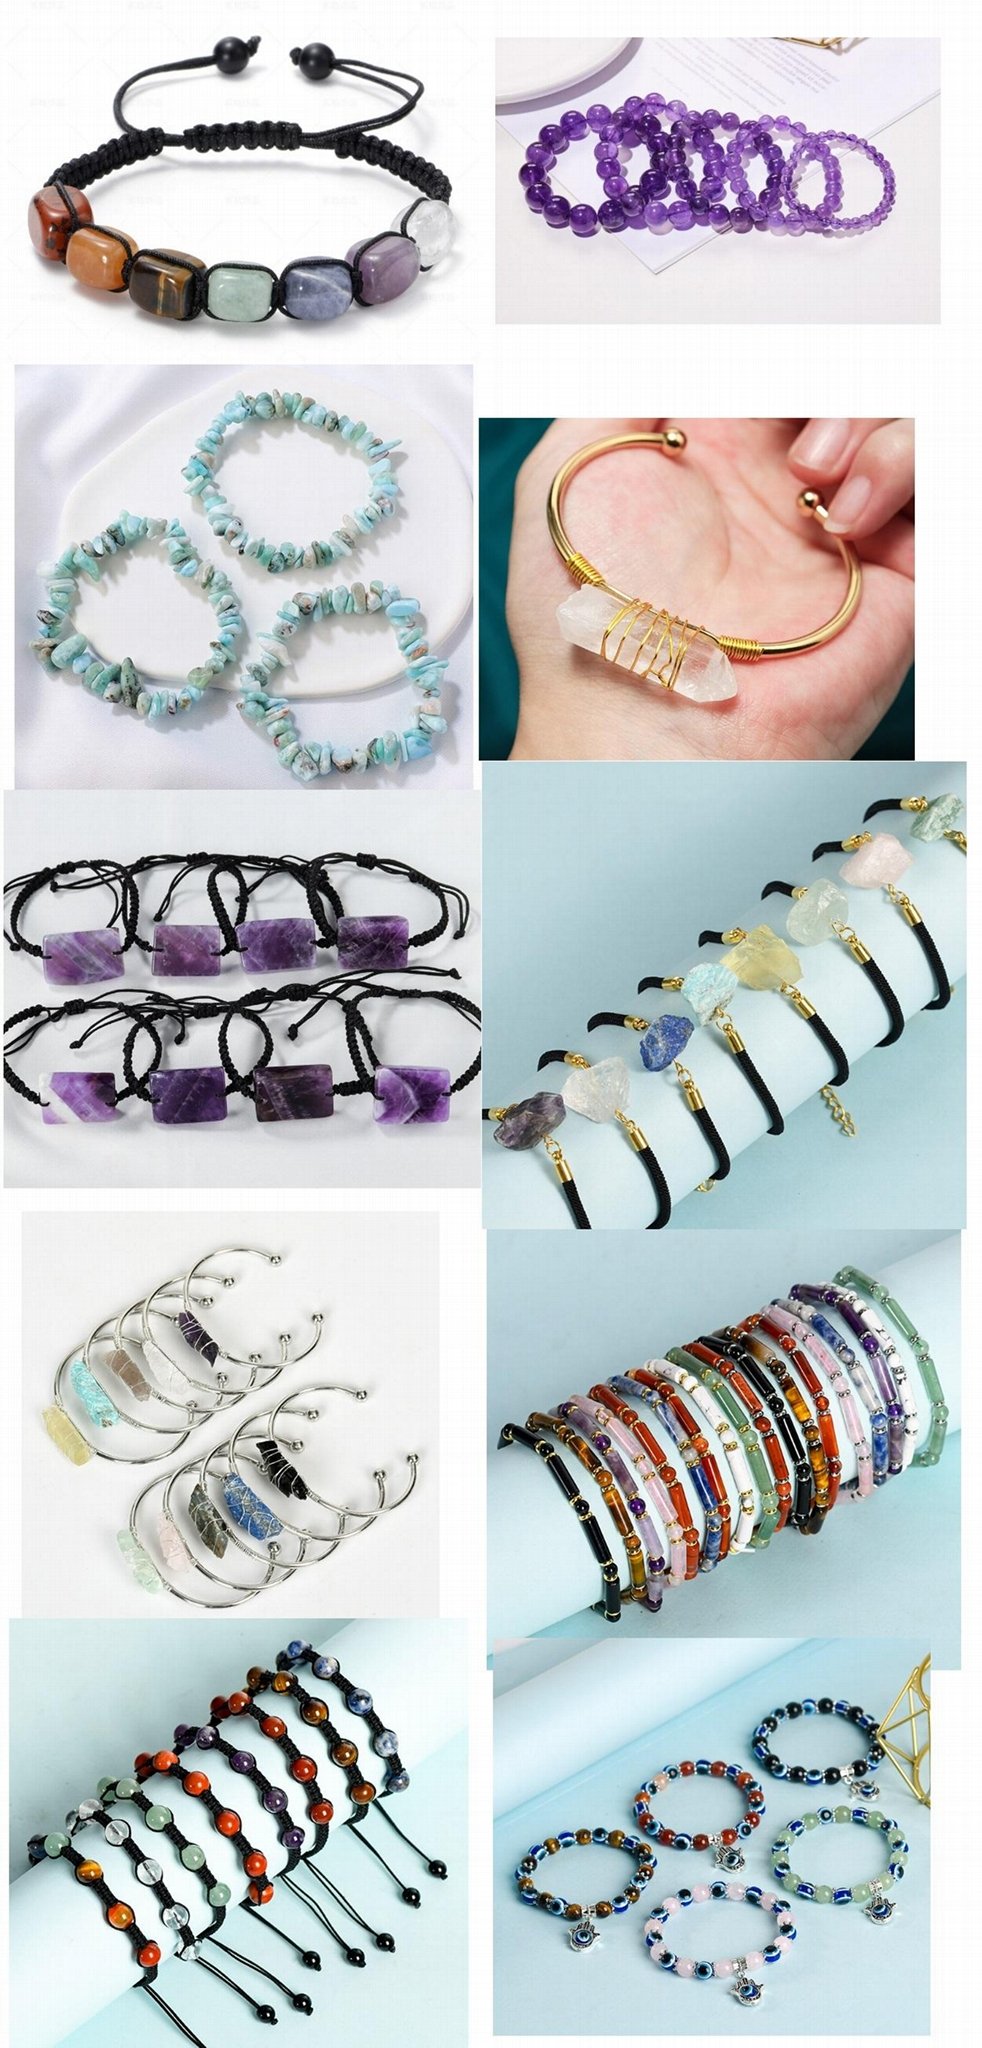 crafts 7 bracelet 2